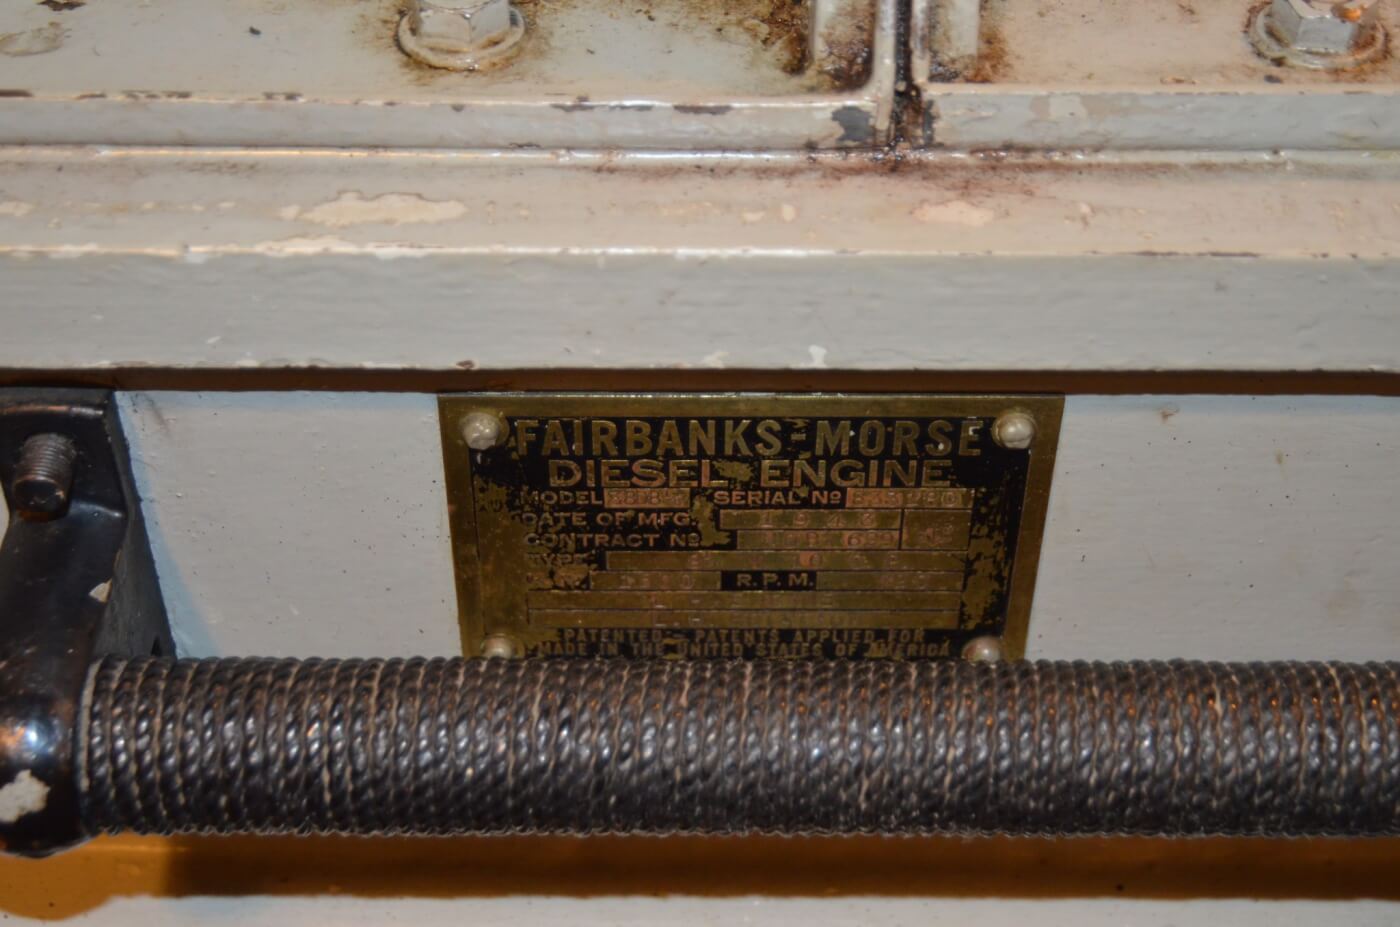 Fairbanks Morse engine data plate.